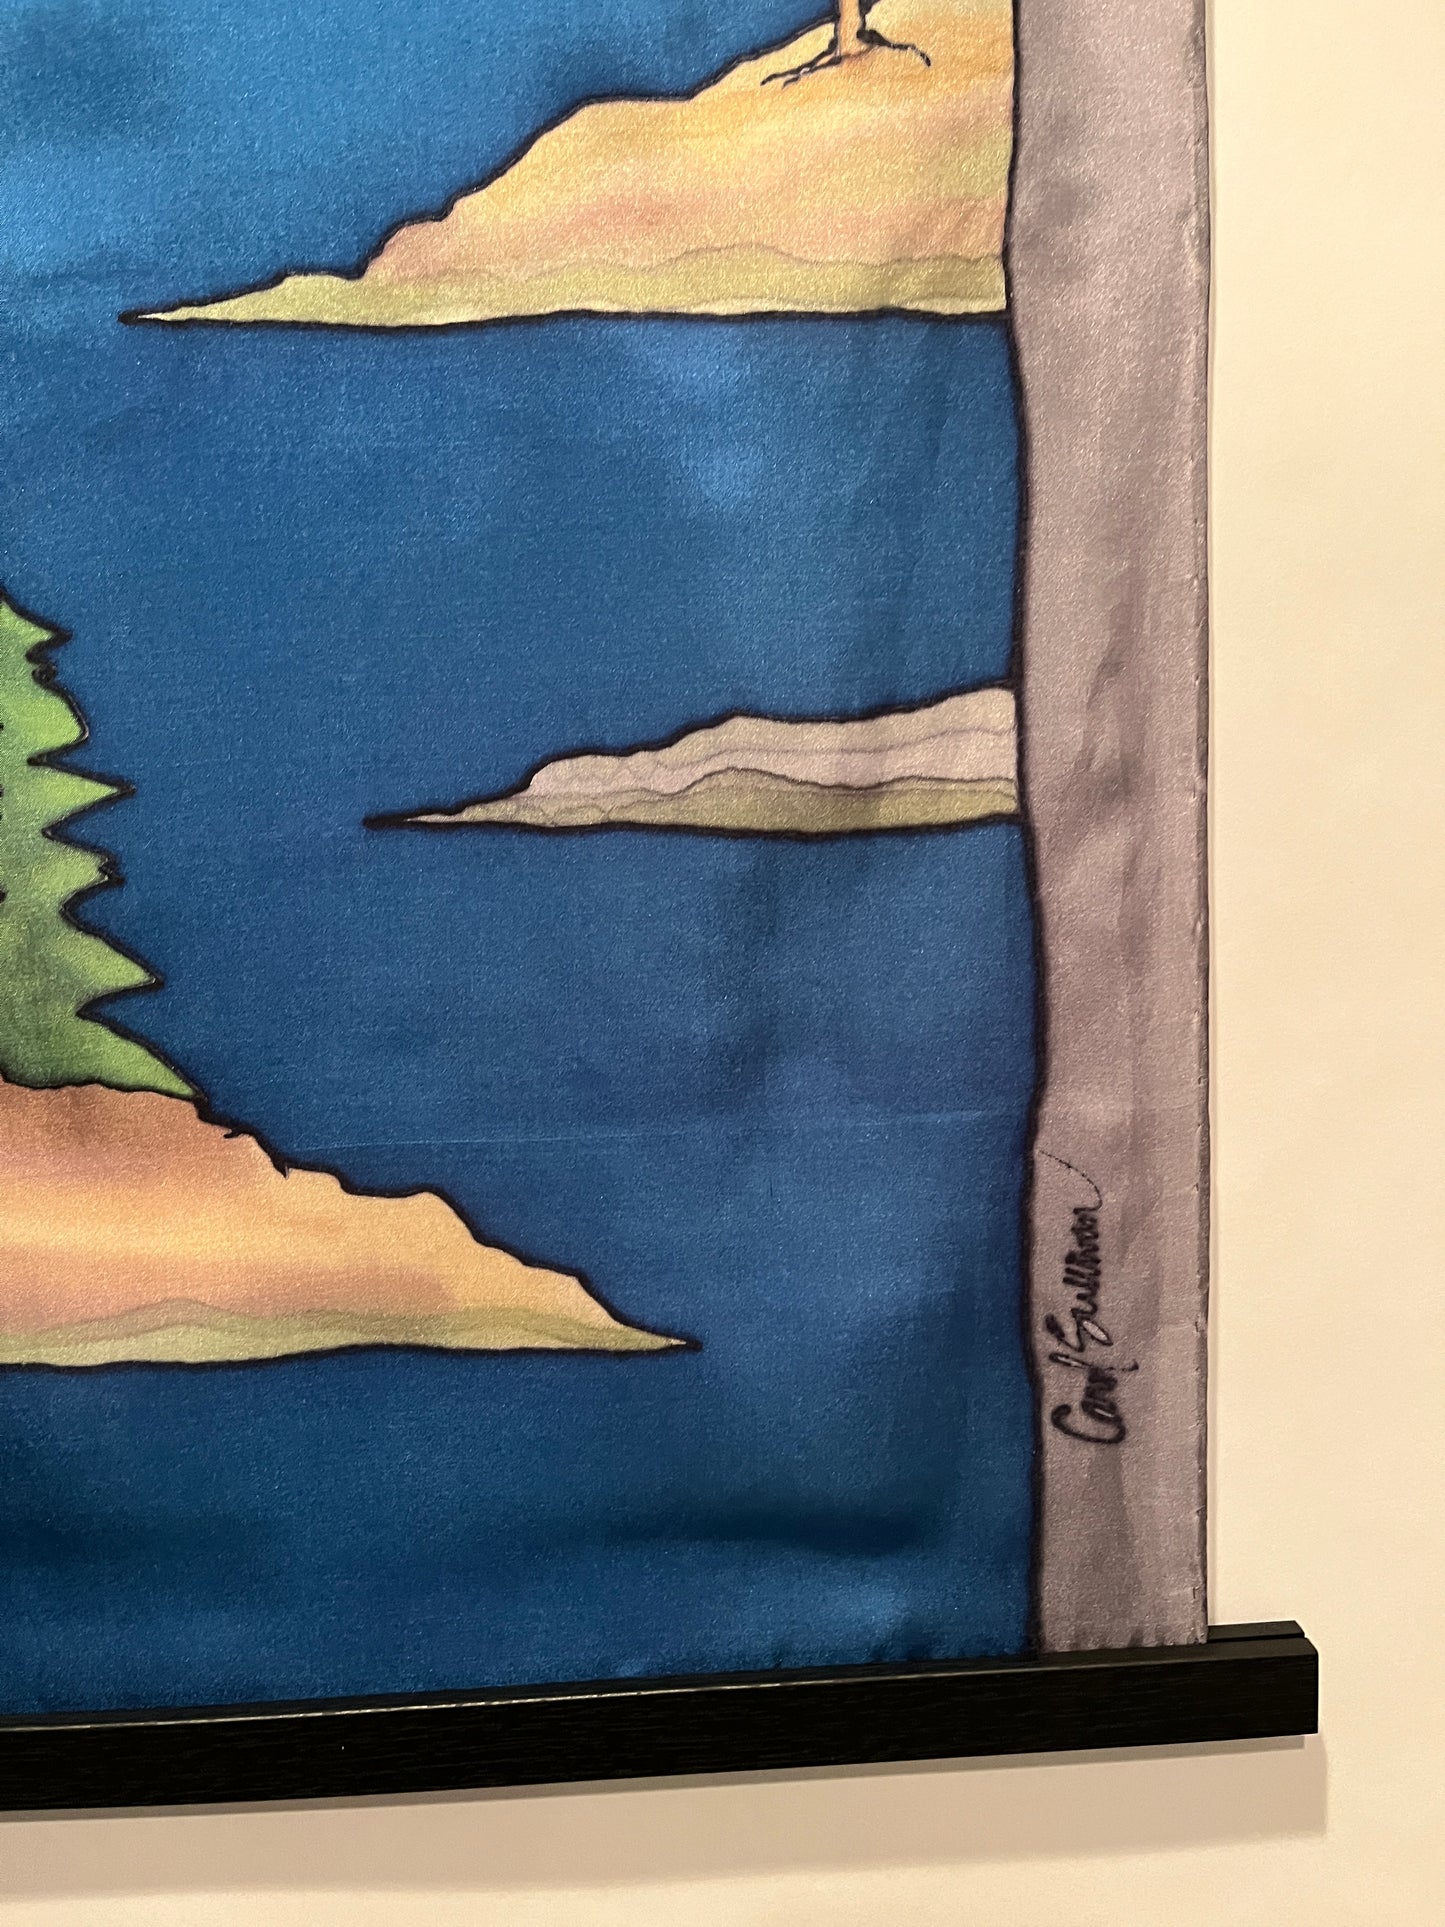 “Maine Coastal Scene v2” - Hand-dyed Silk Wall Hanging  - $175